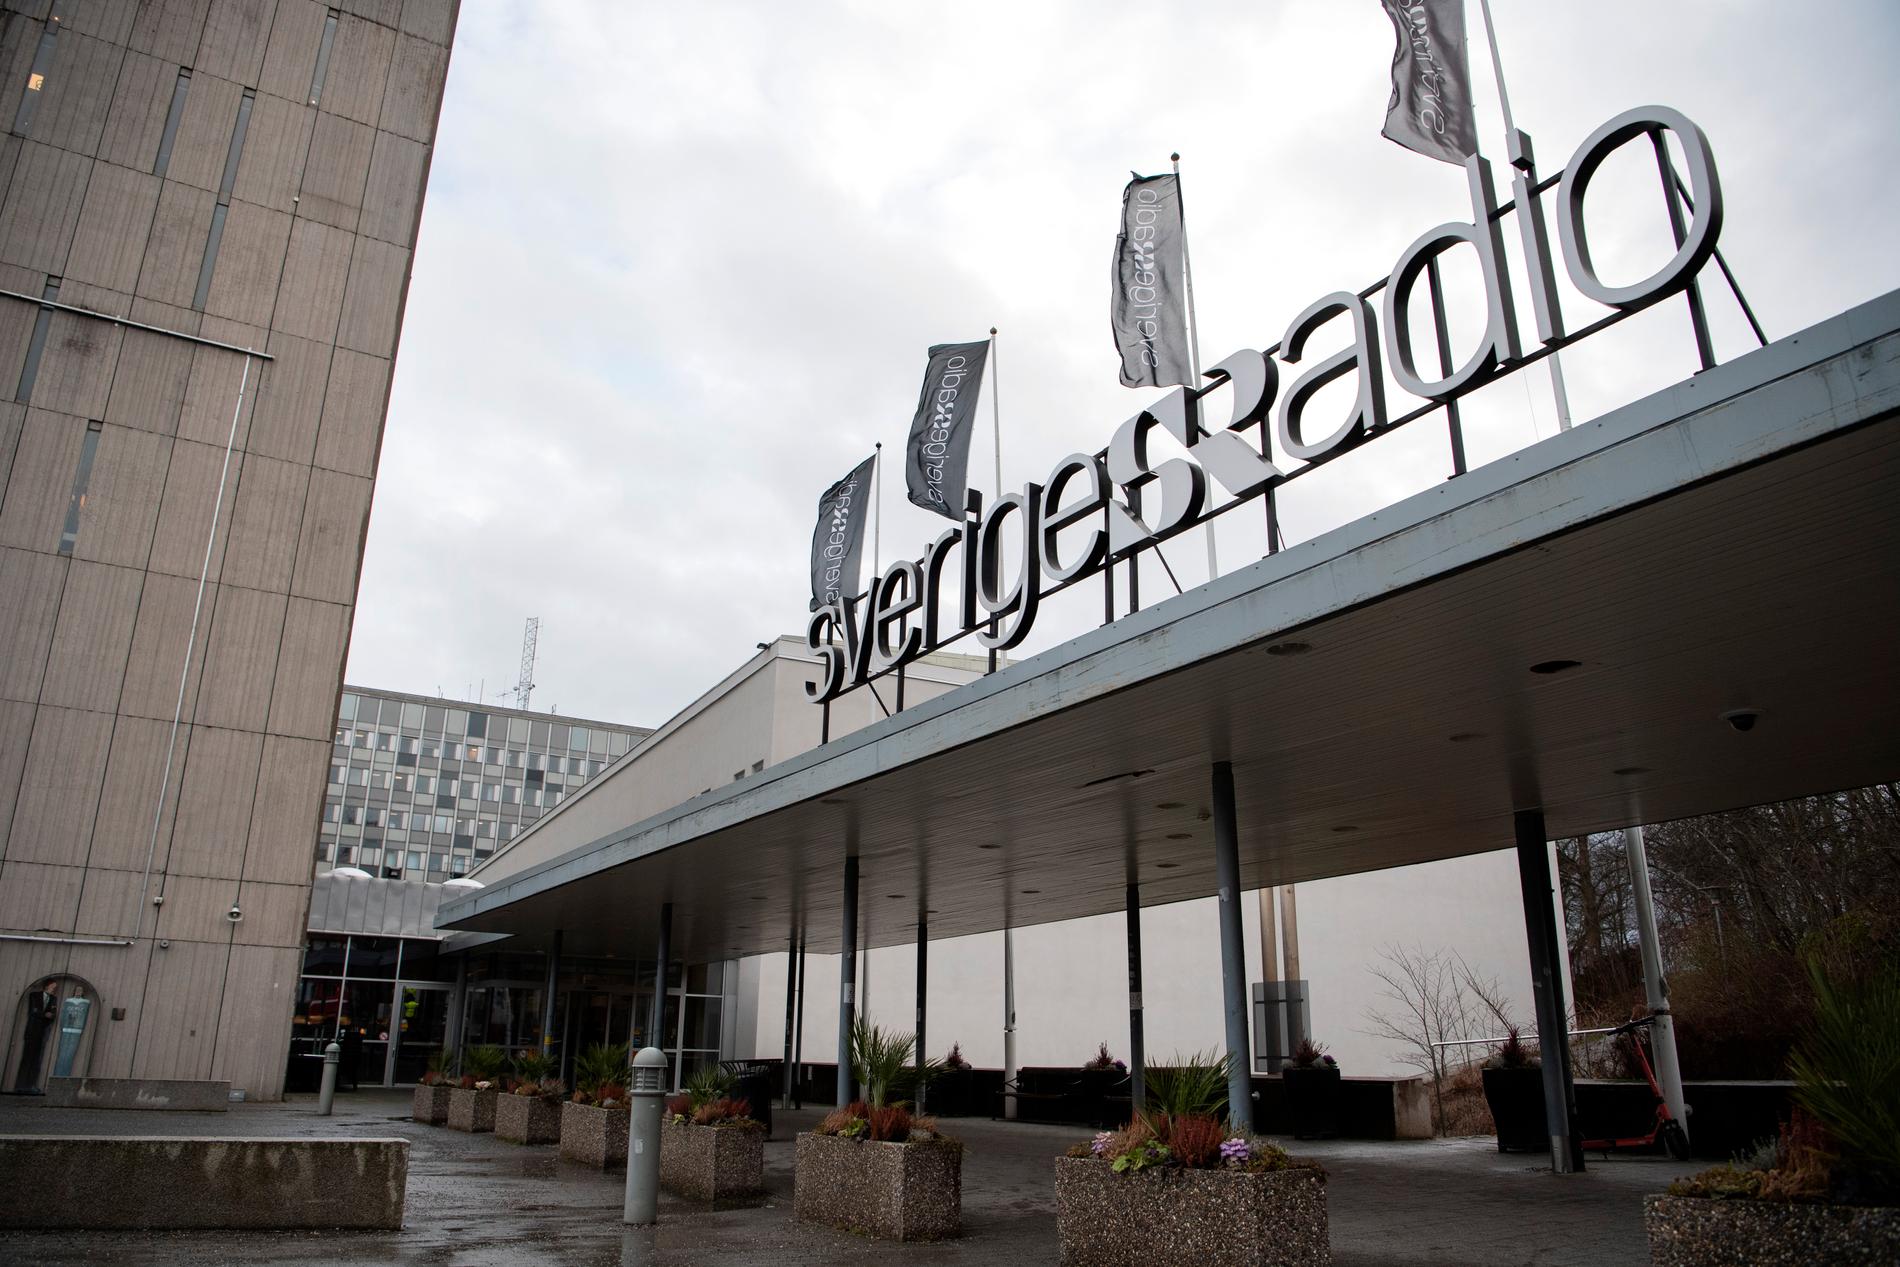 Sveriges Radio.